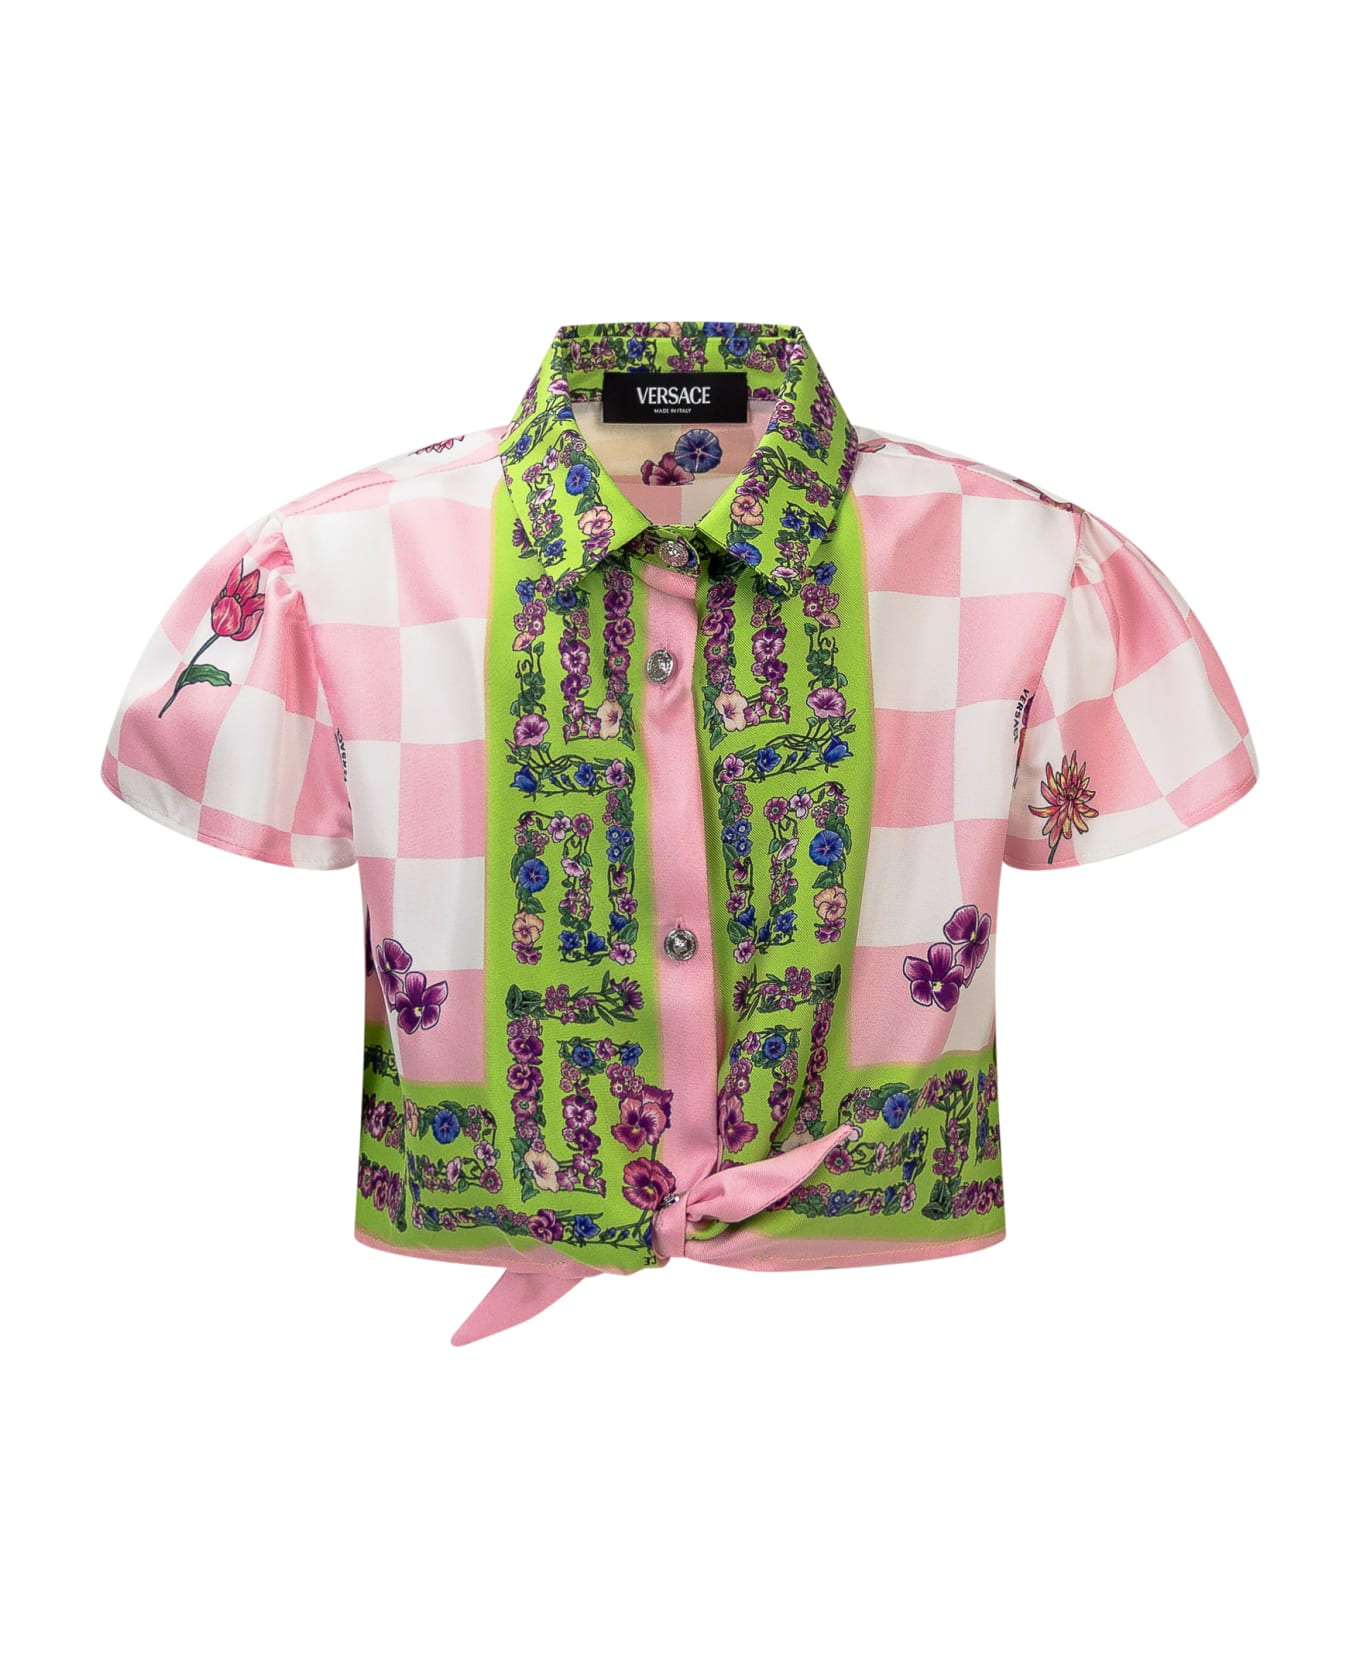 Versace Blossom Shirt - Multicolore